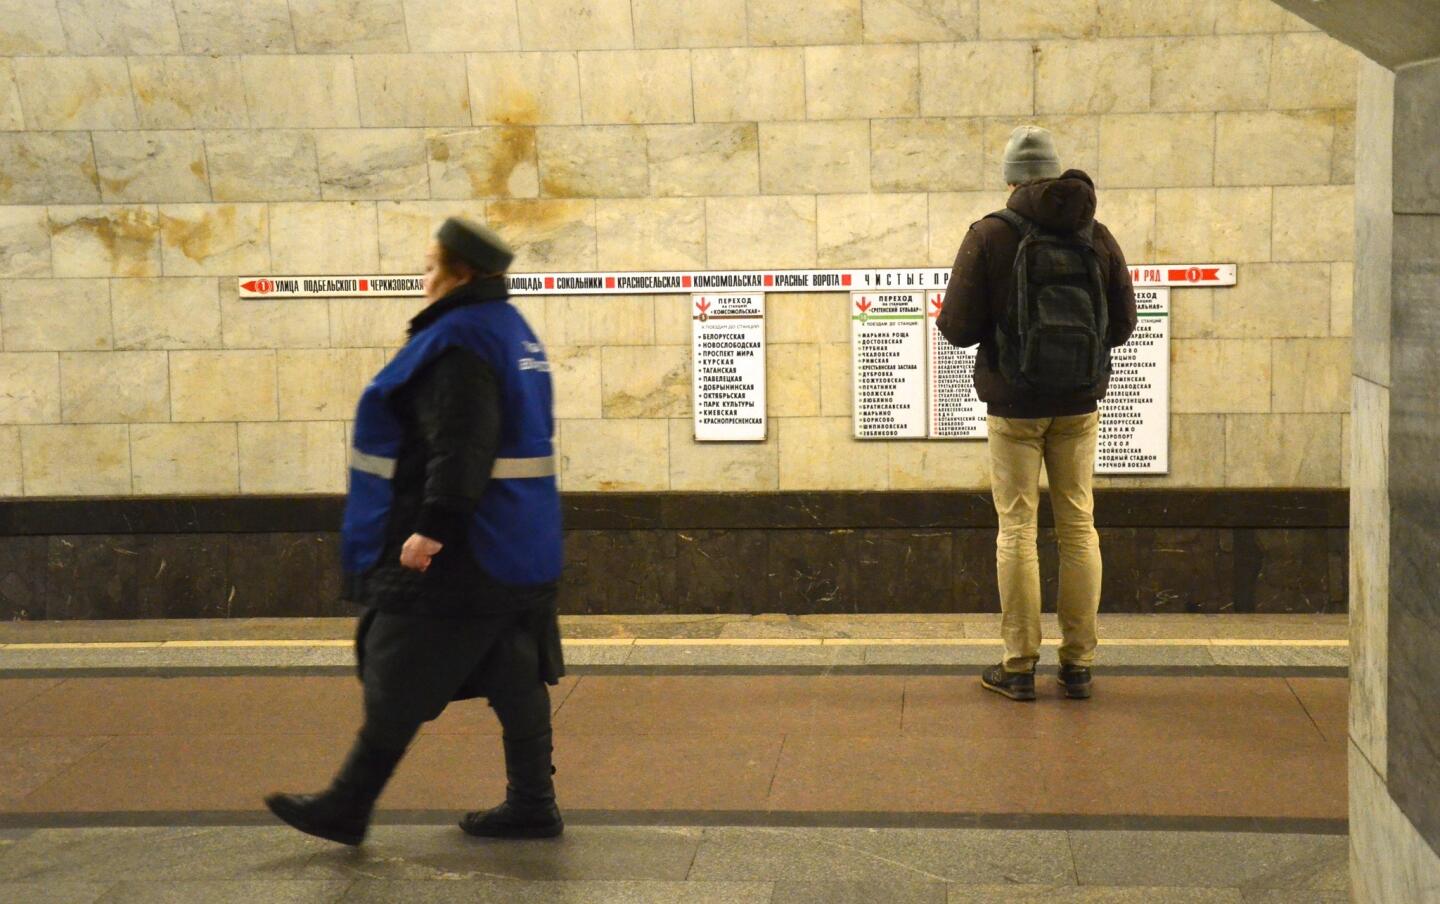 THE EVENT: Subway navigation